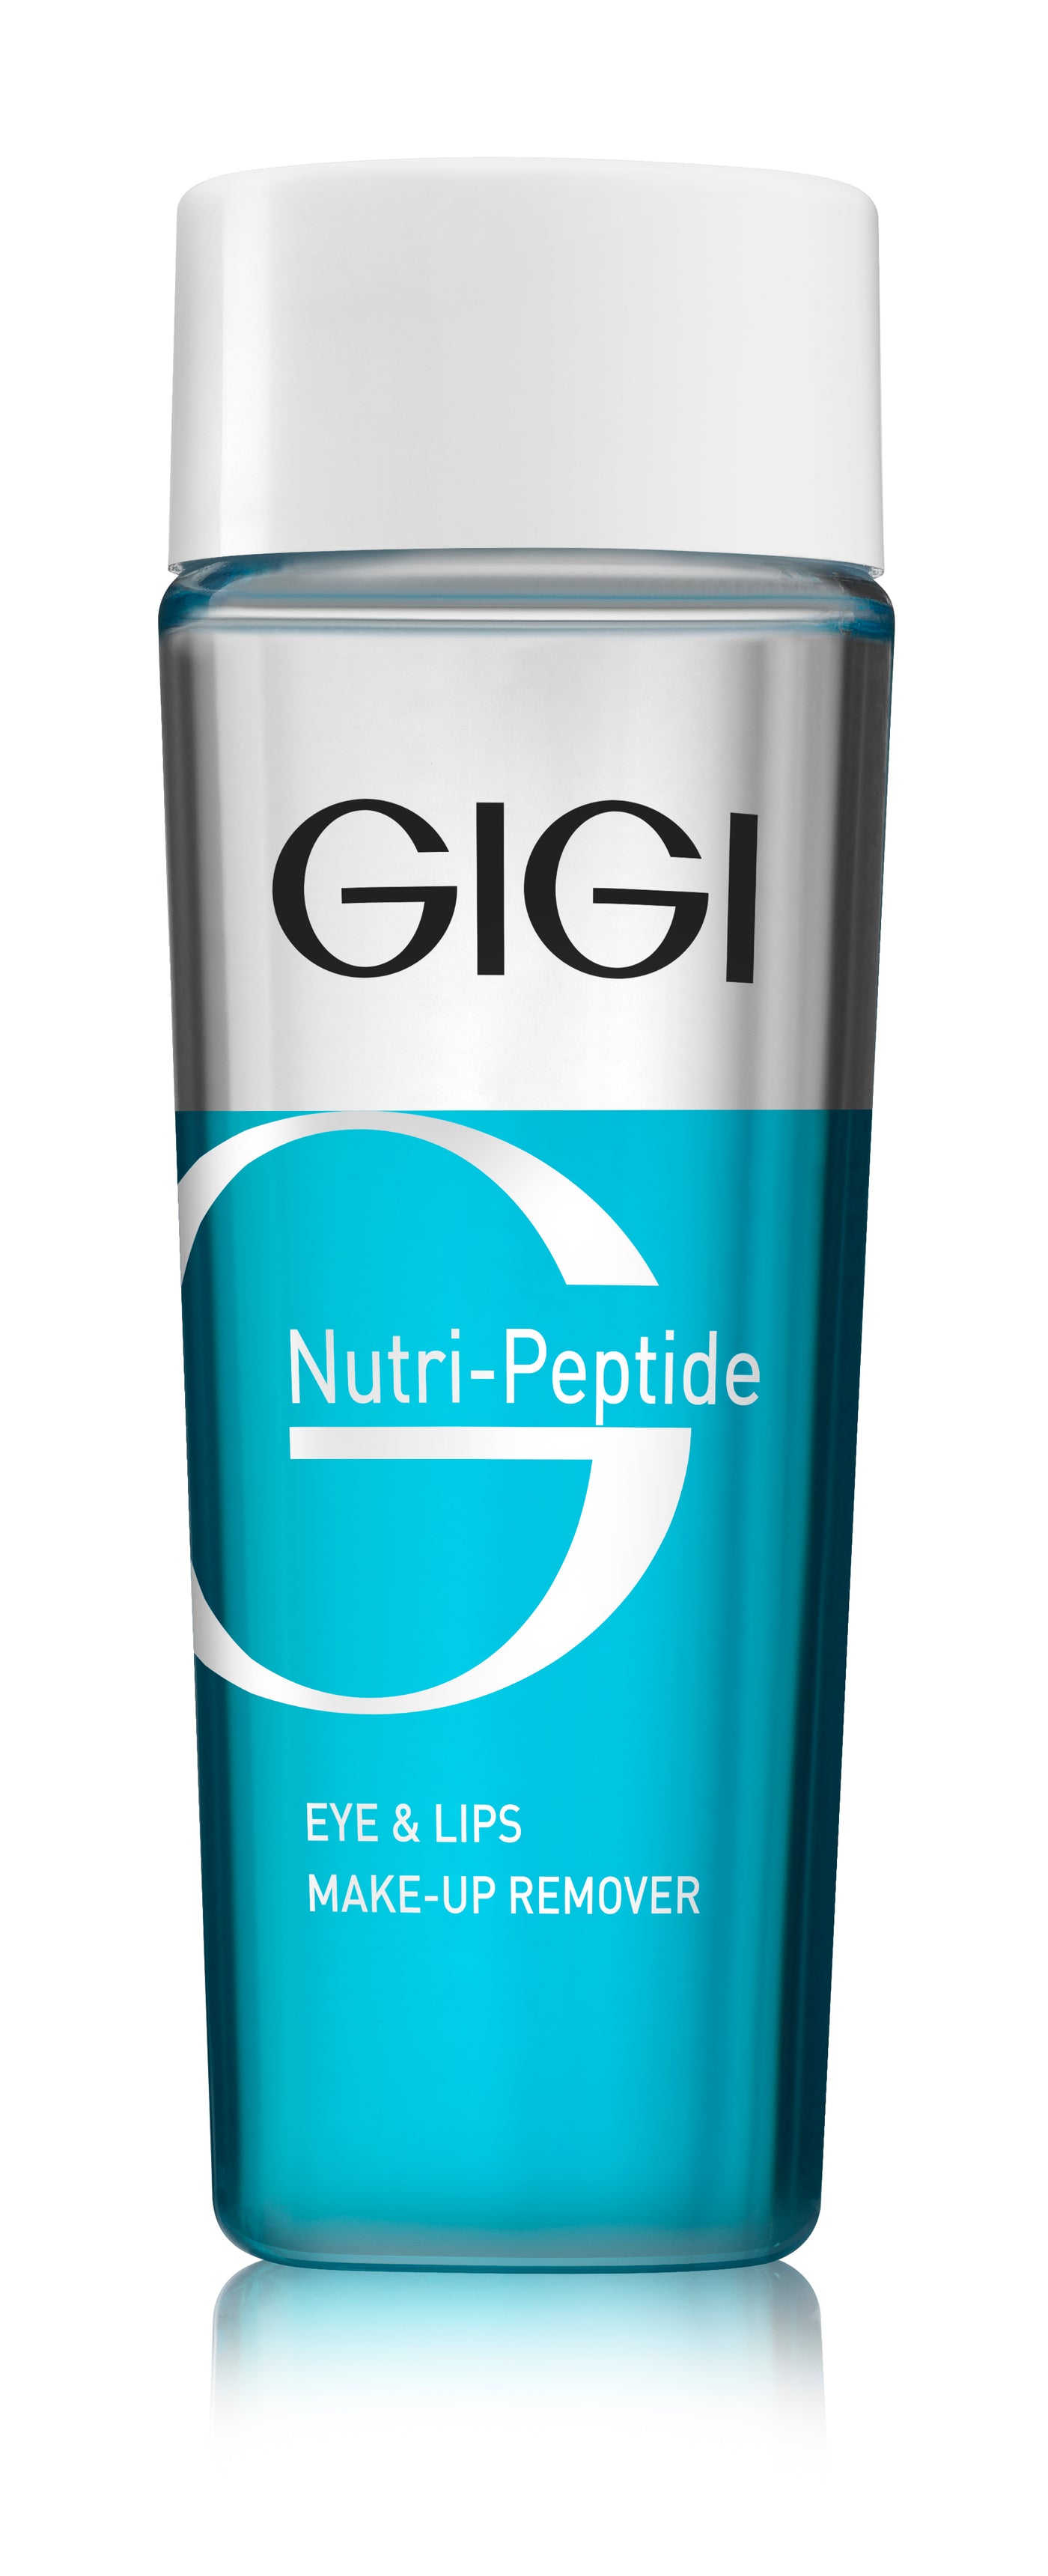 GIGI Nutri Peptide Eye & Lips Make-Up Remover